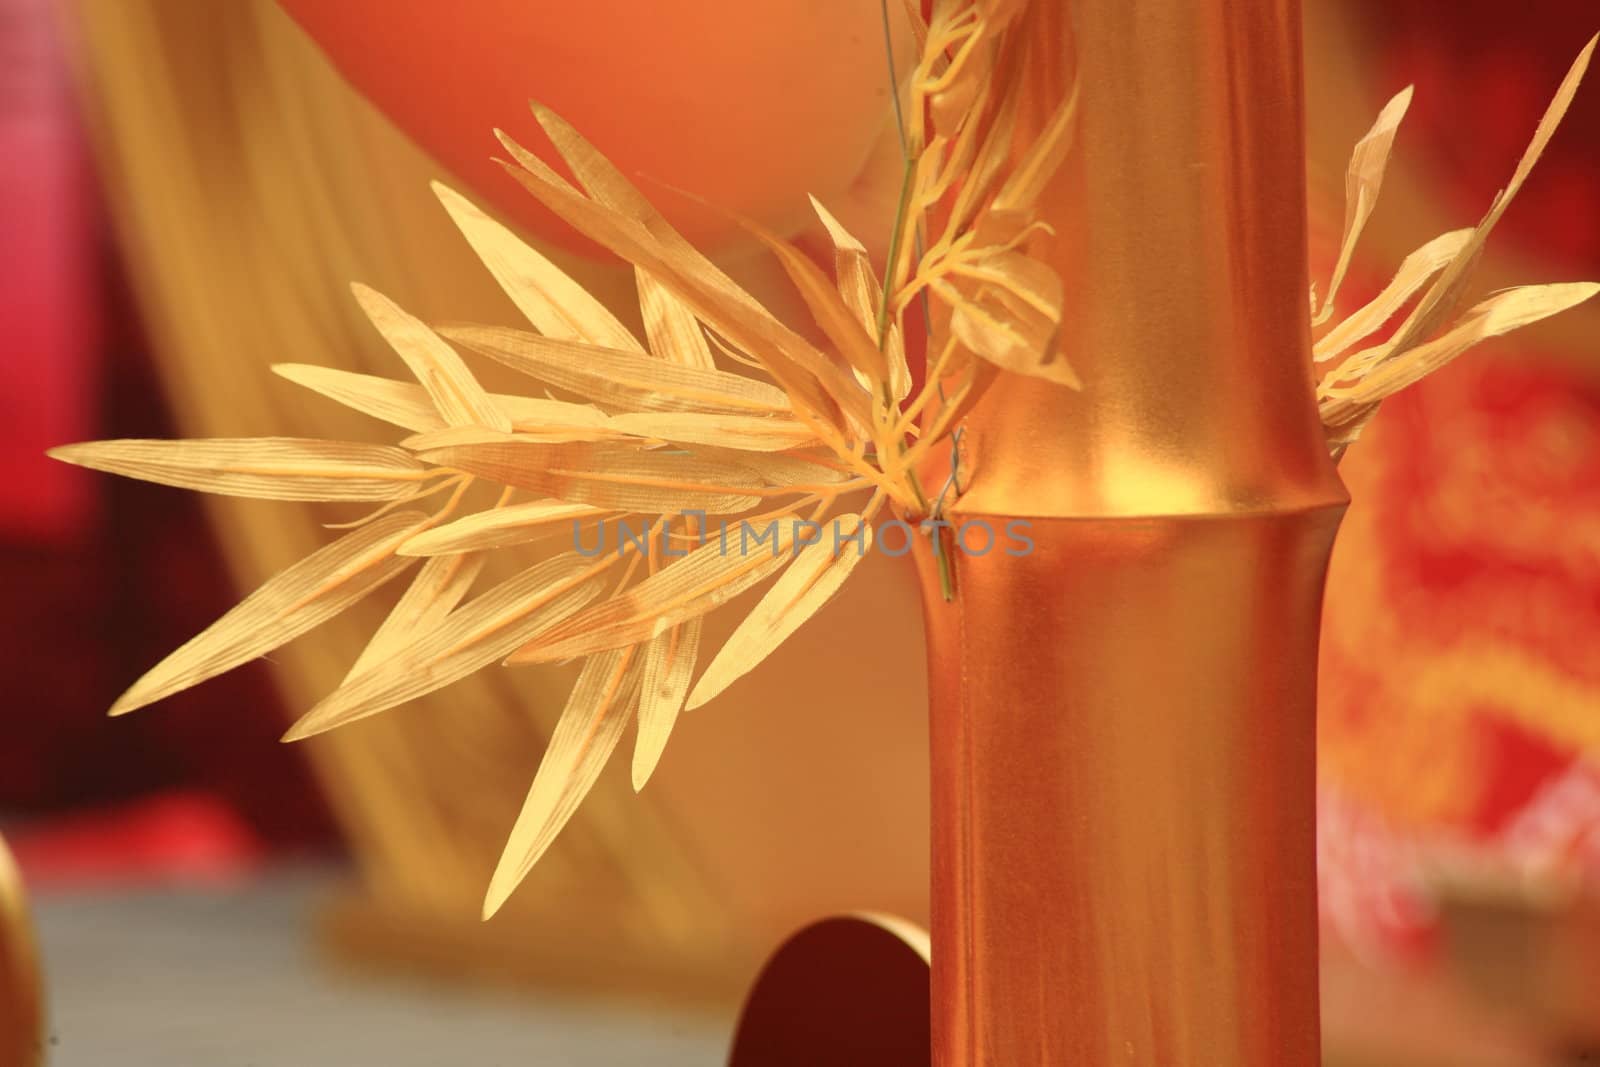 chinese new year scene, man-made golden bamboo